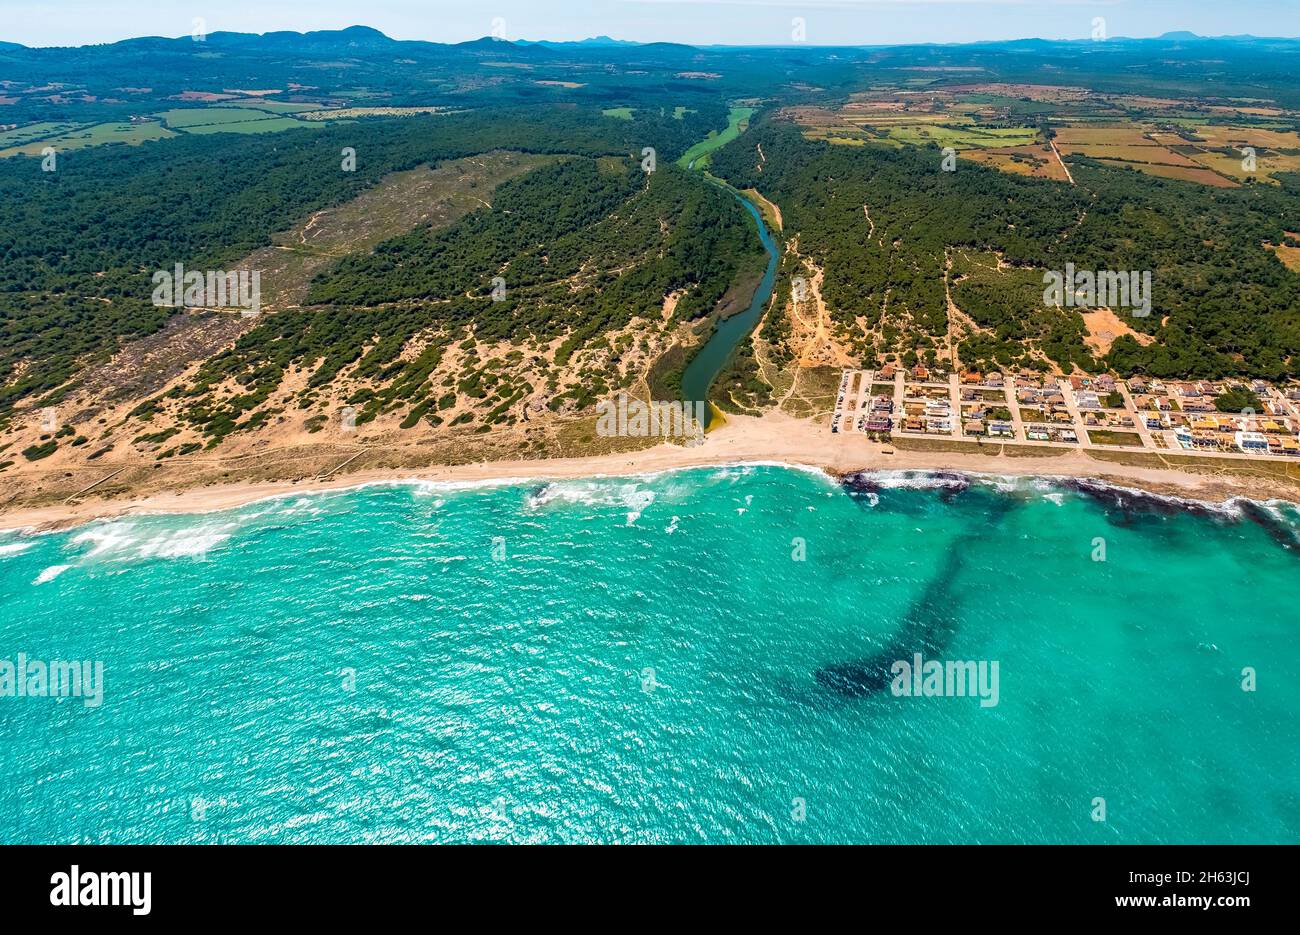 Luftbild, Son serra de Marina, Bucht von alcudia mit Strand und Fincas, Torrent de na borges Fluss, santa margalida, mallorca, balearen, spanien Stockfoto